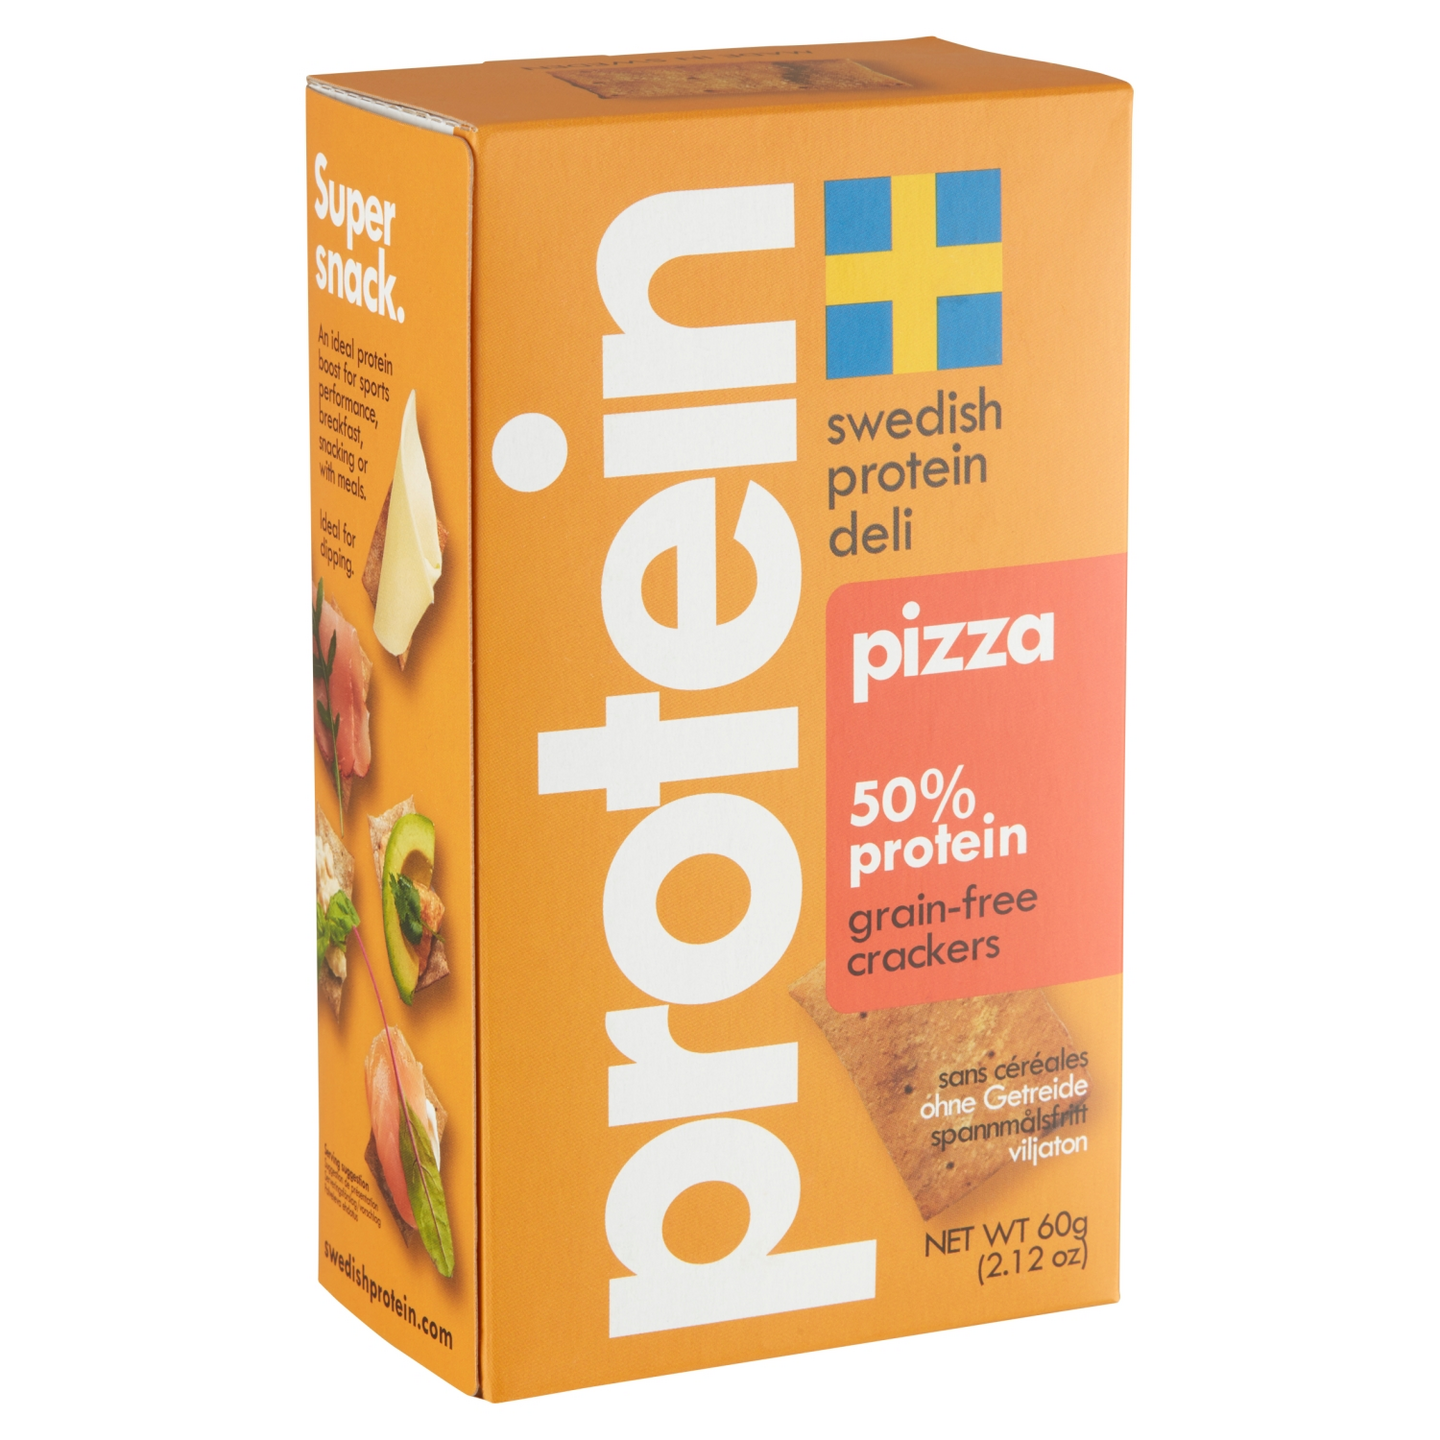 Swedish Protein Deli pizzakeksi 60g 50% protein gluteeniton